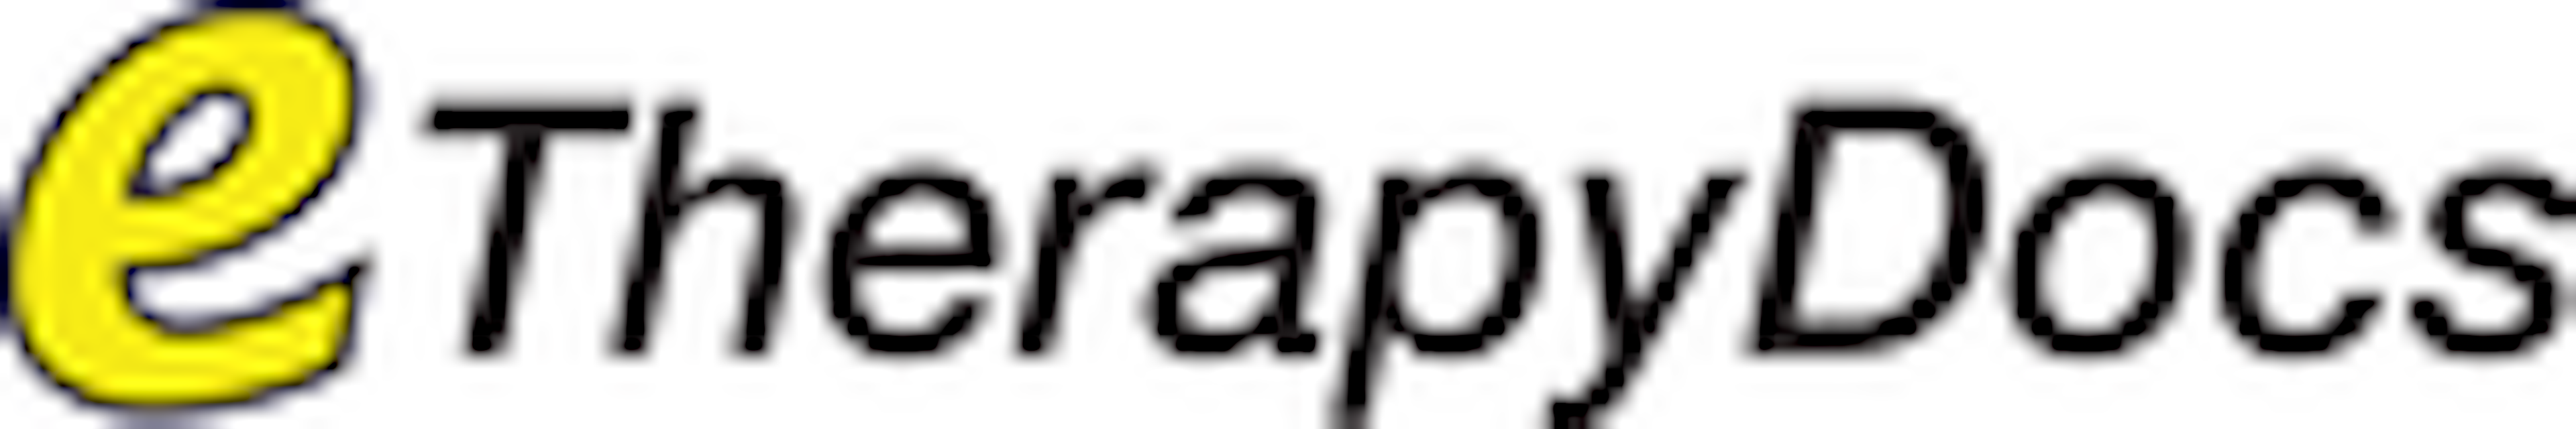 eTherapyDocs Logo